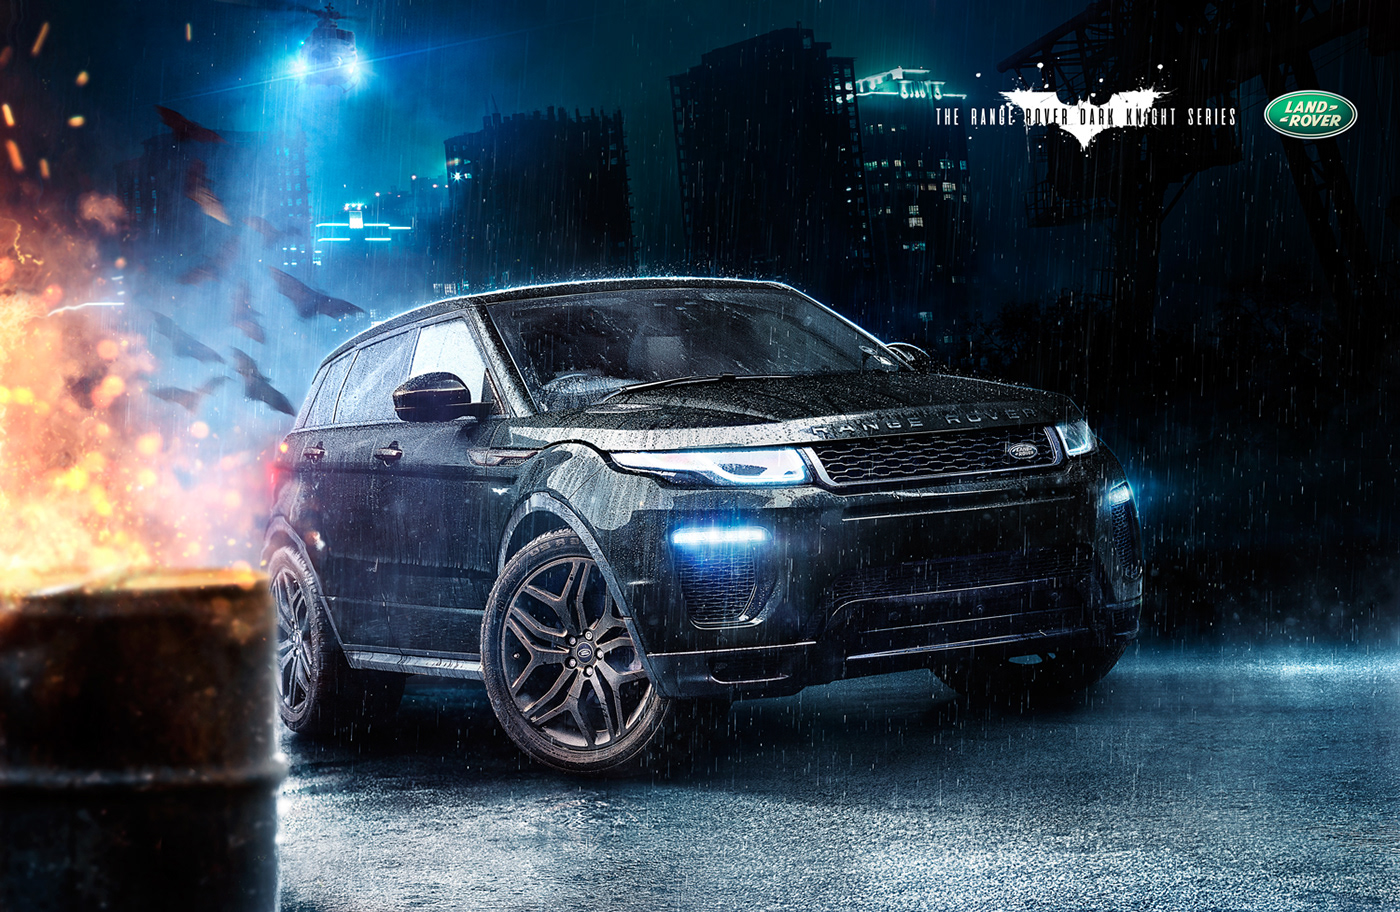 range rover batman dark knight manipulation arte direction car creative retouch matte paint Advertising  Image manipulation